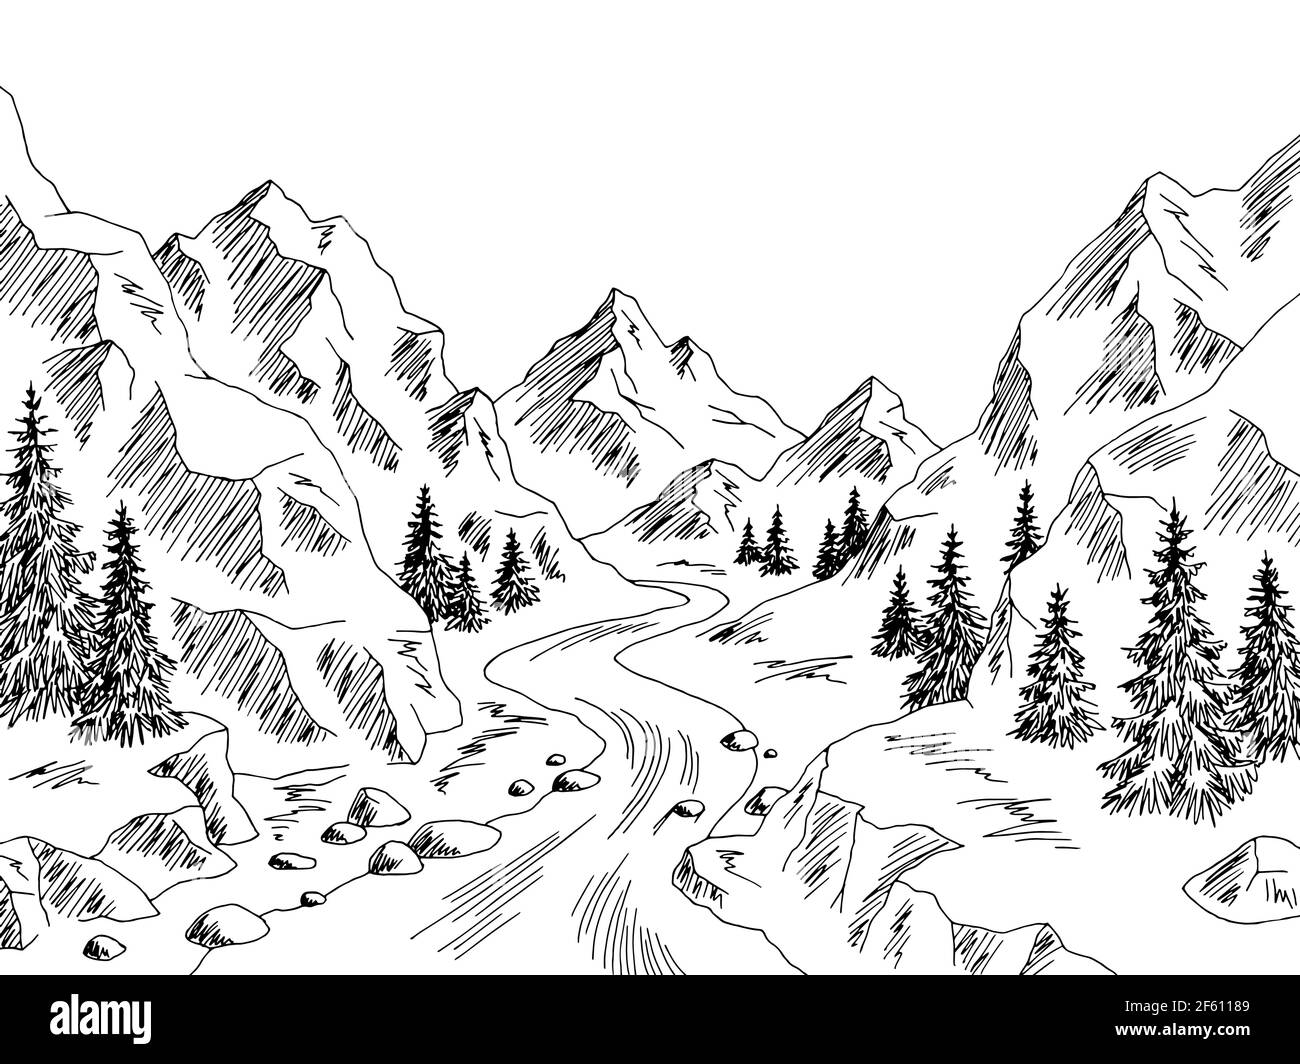 Montaña valle río gráfico blanco negro paisaje dibujo ilustración vector  Imagen Vector de stock - Alamy